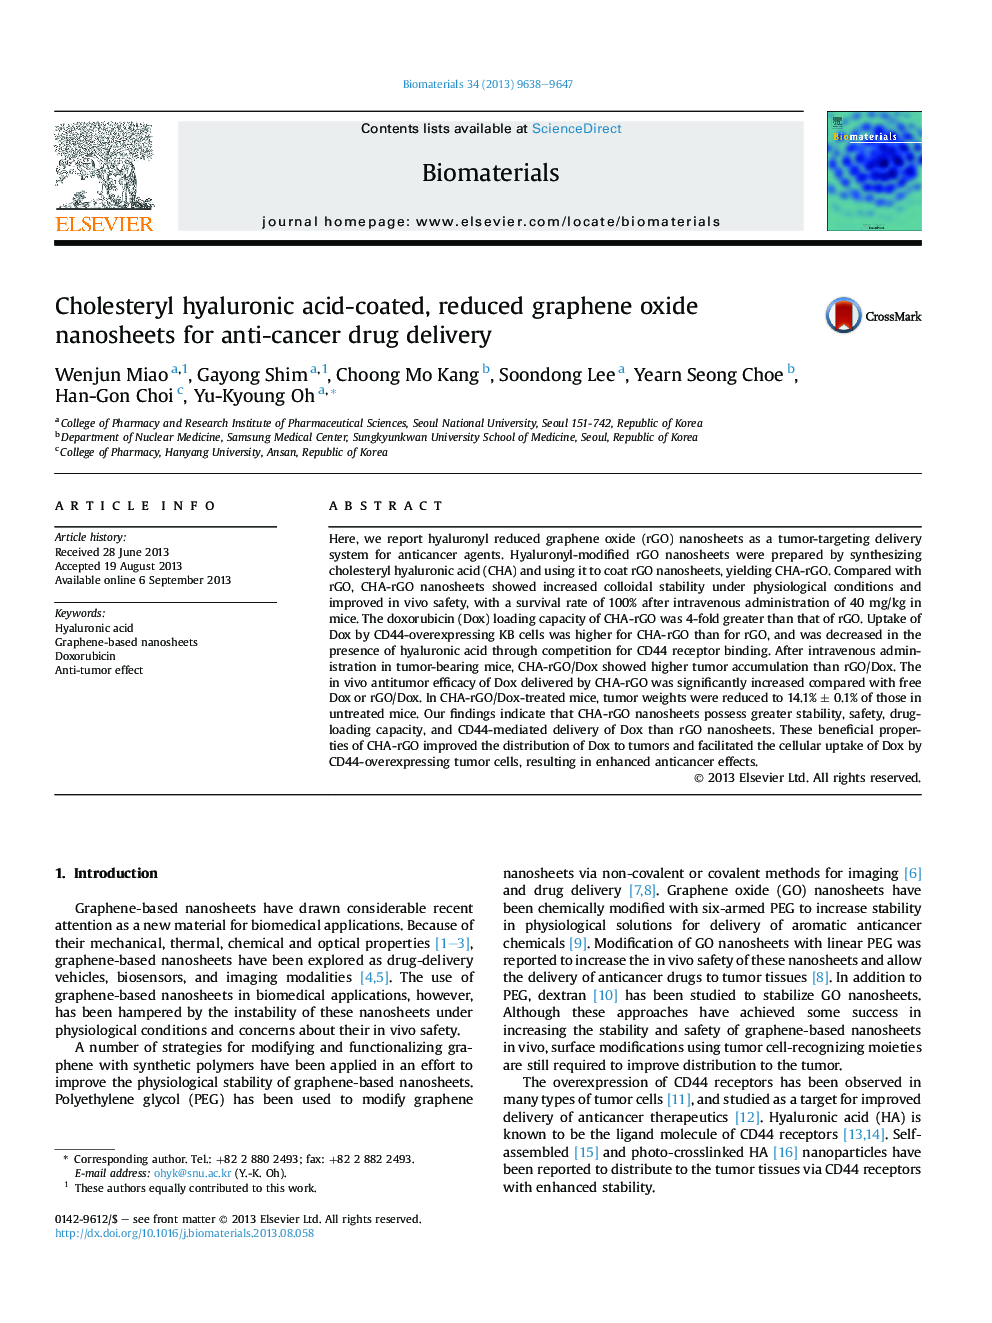 Cholesteryl hyaluronic acid-coated, reduced graphene oxide nanosheets for anti-cancer drug delivery